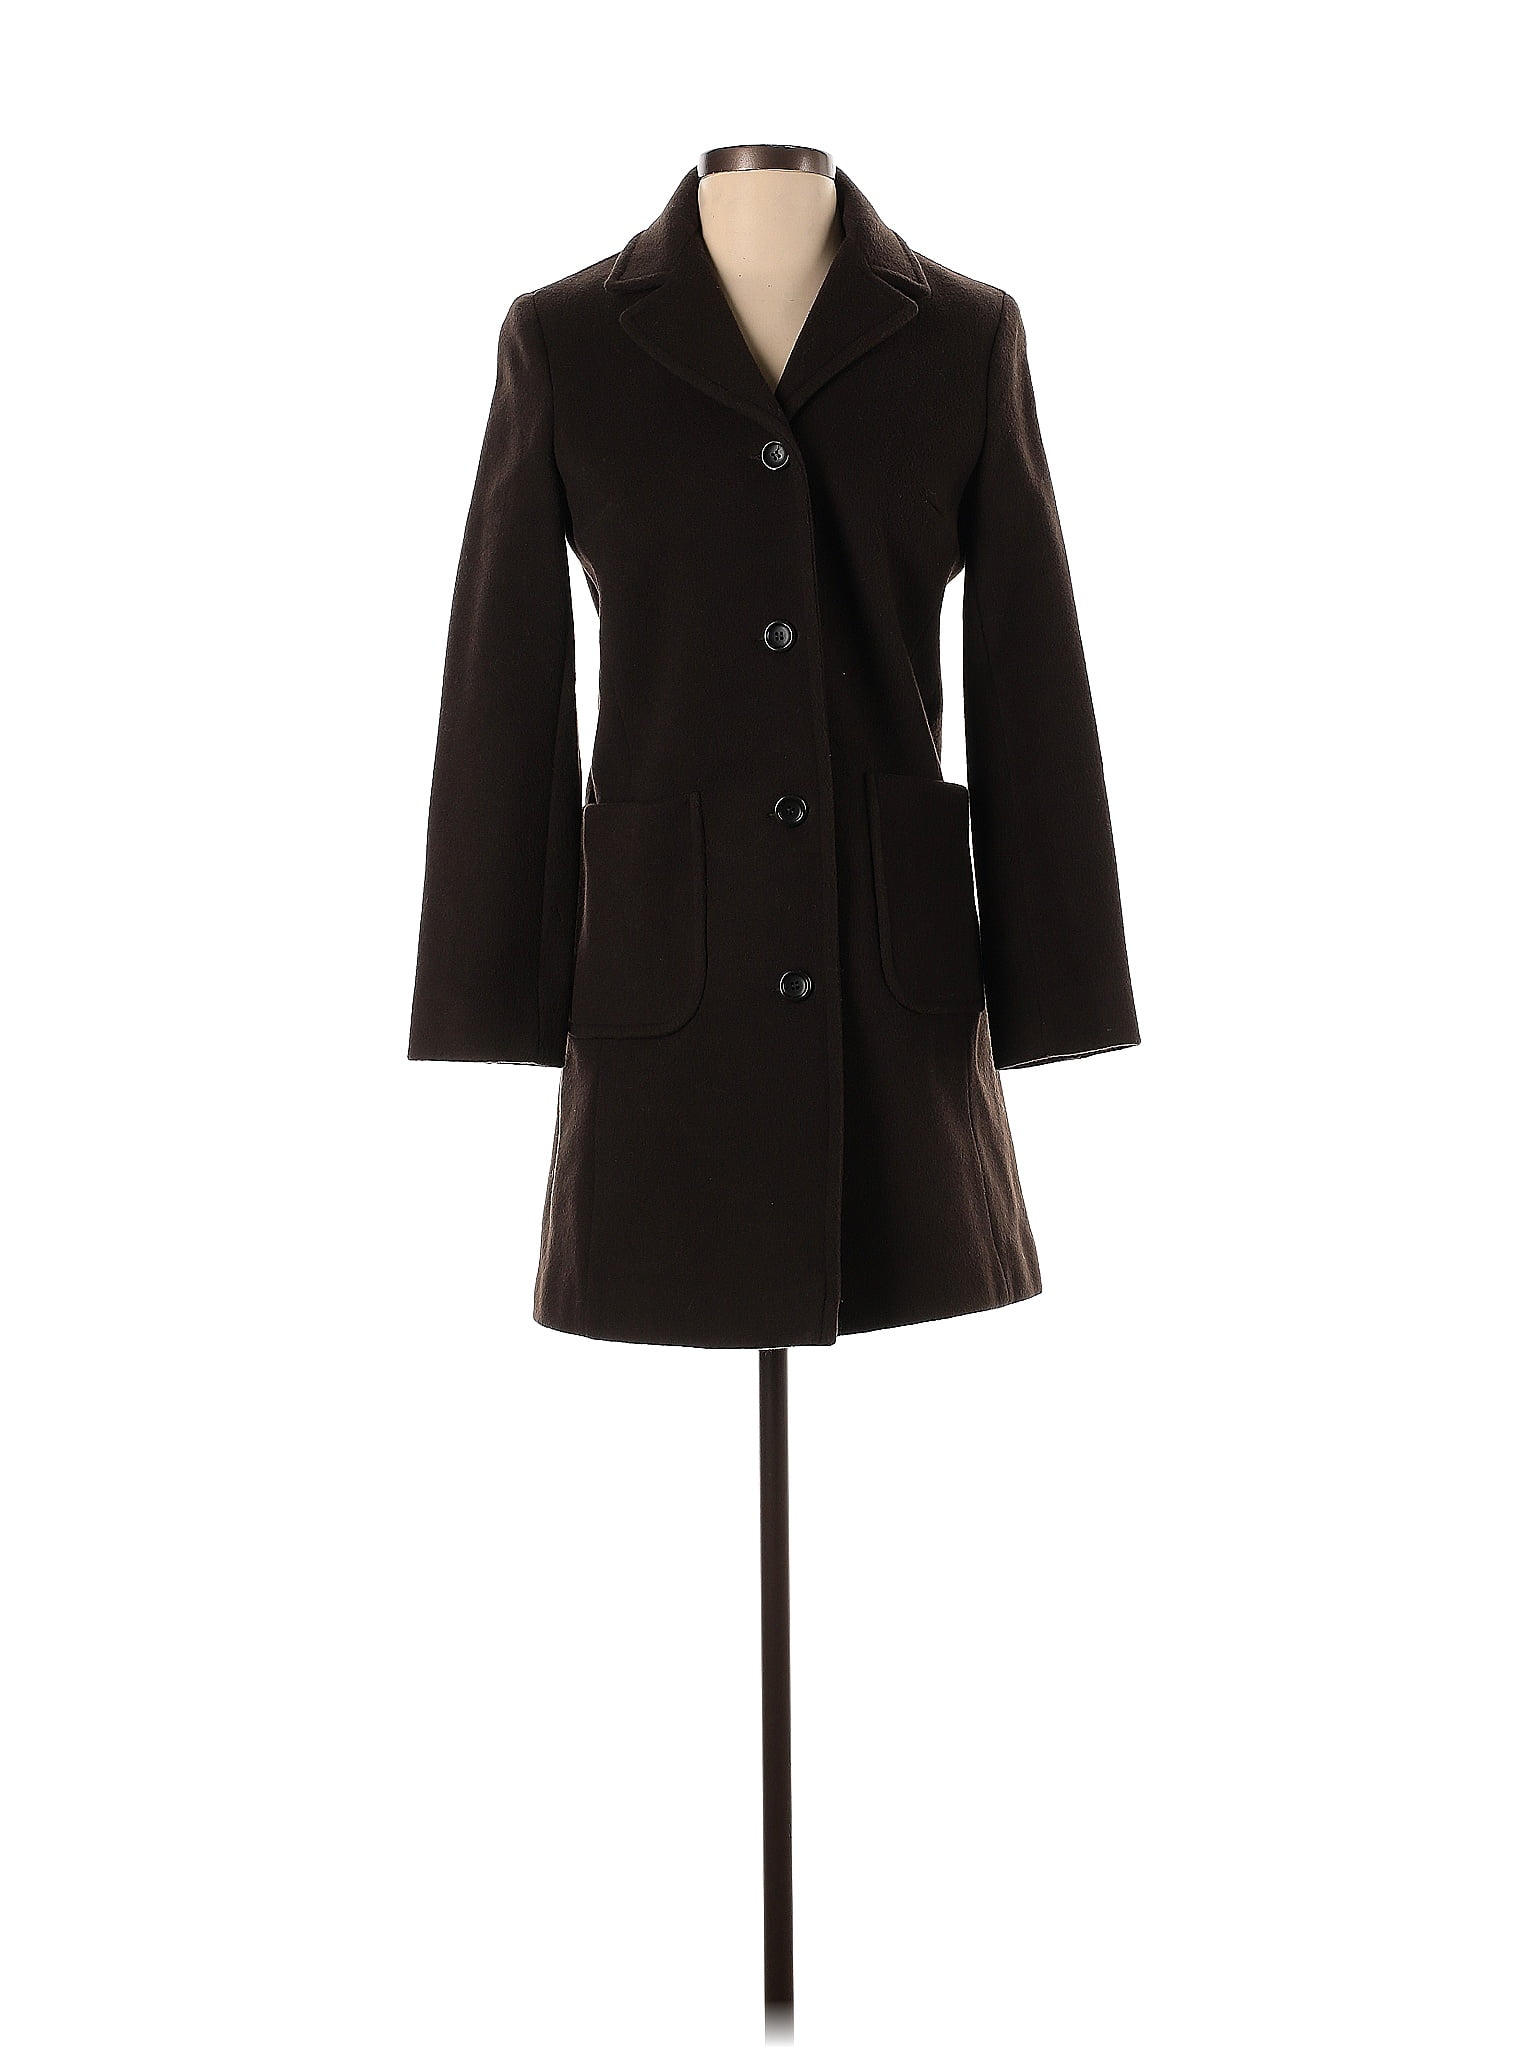 J.Crew Solid Brown Wool Coat Size XS (Petite) - 75% off | thredUP